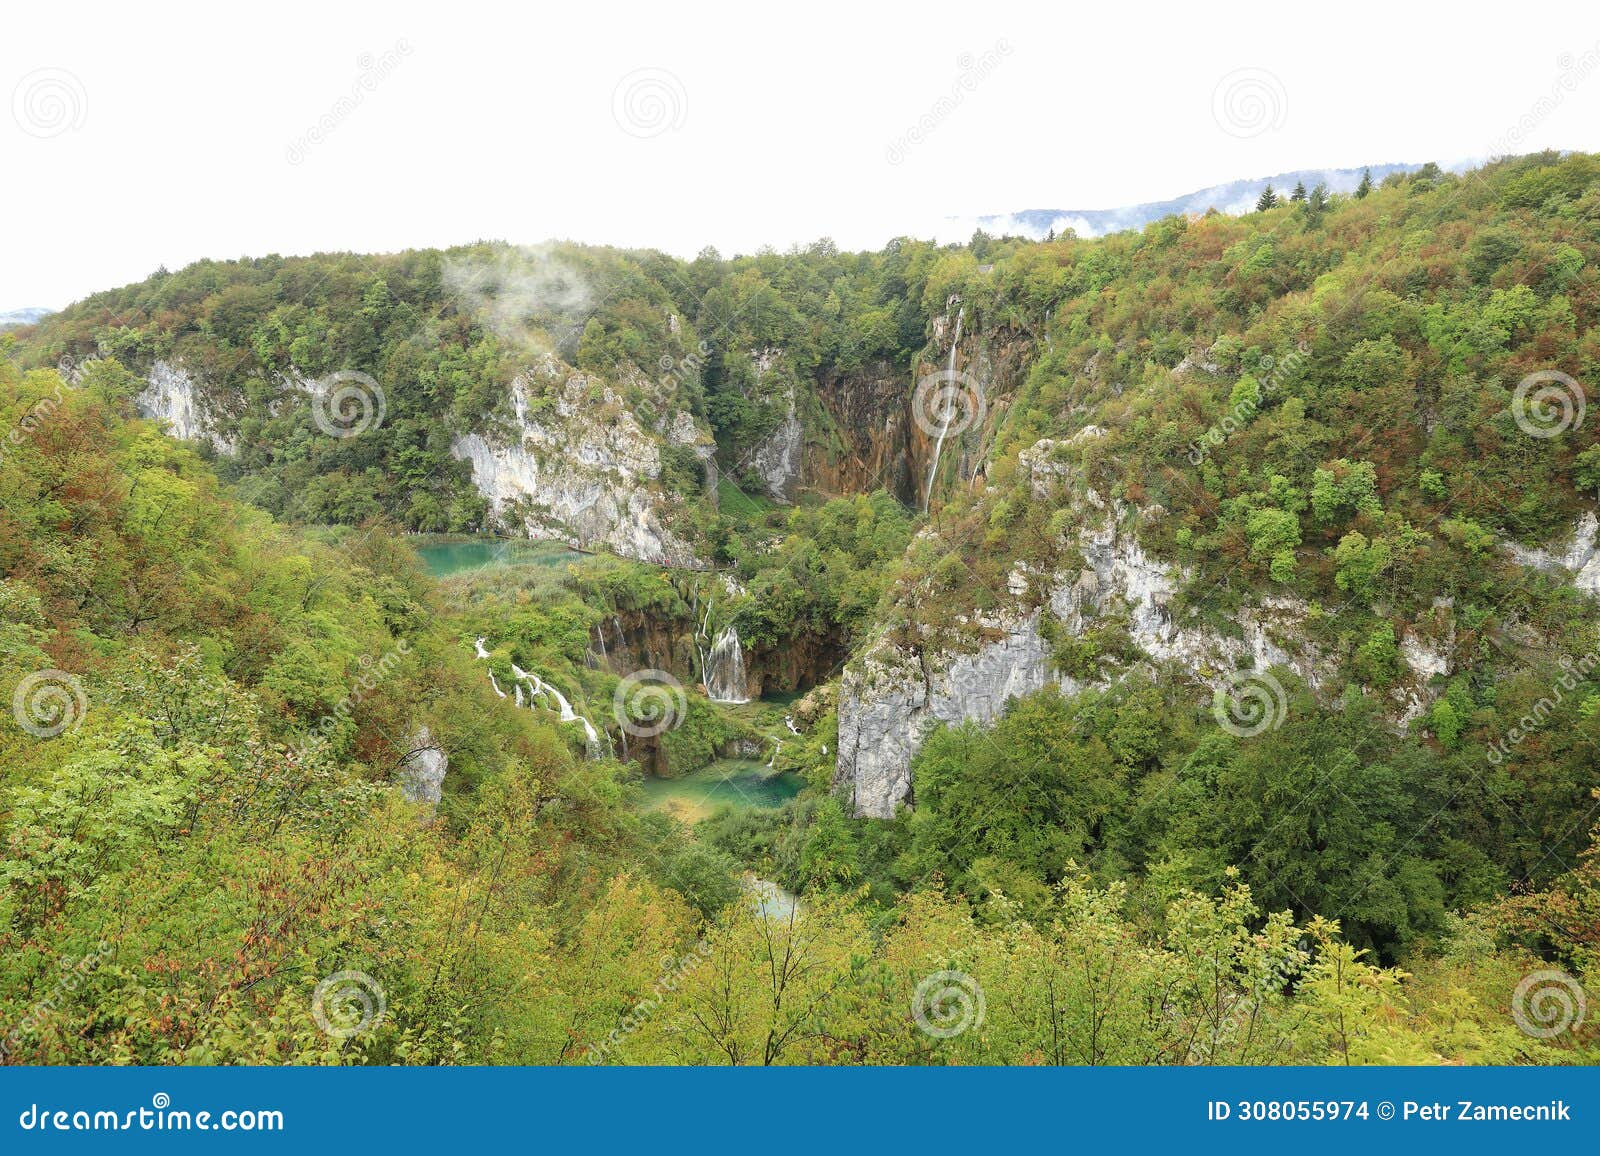 big waterfall and low lakes on plitvicka jezera in croatia